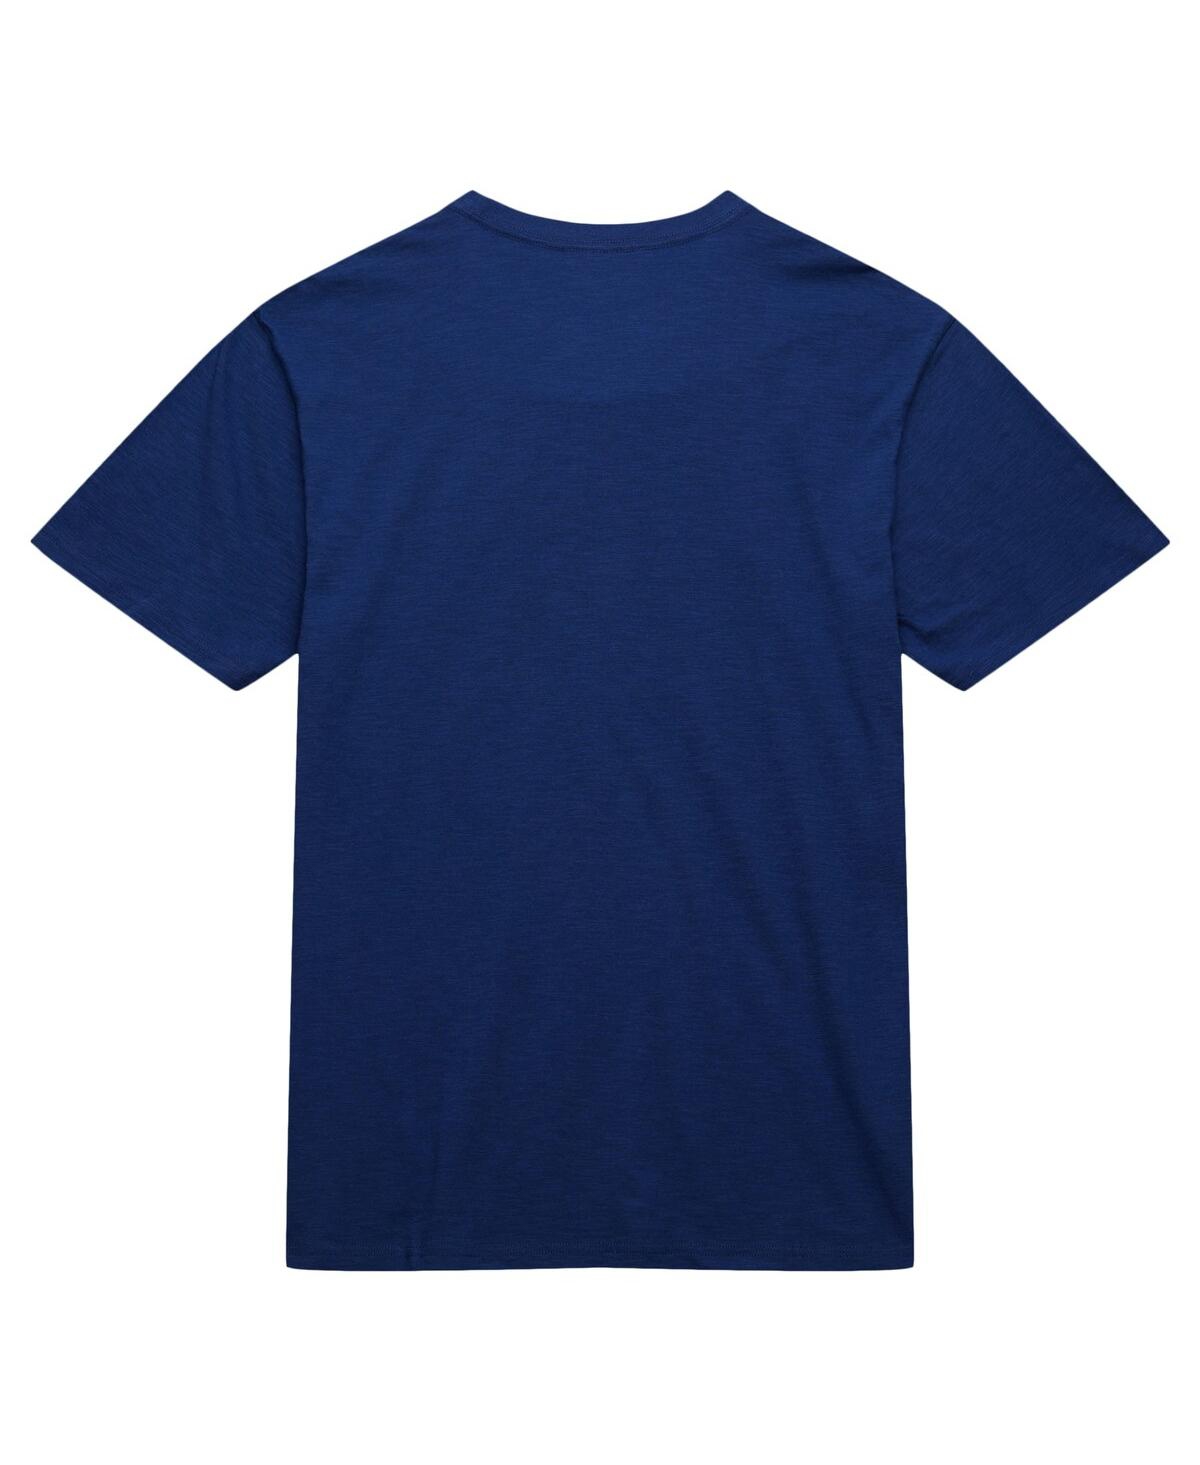 Shop Mitchell & Ness Men's  Blue Toronto Maple Leafs Legendary Slub T-shirt